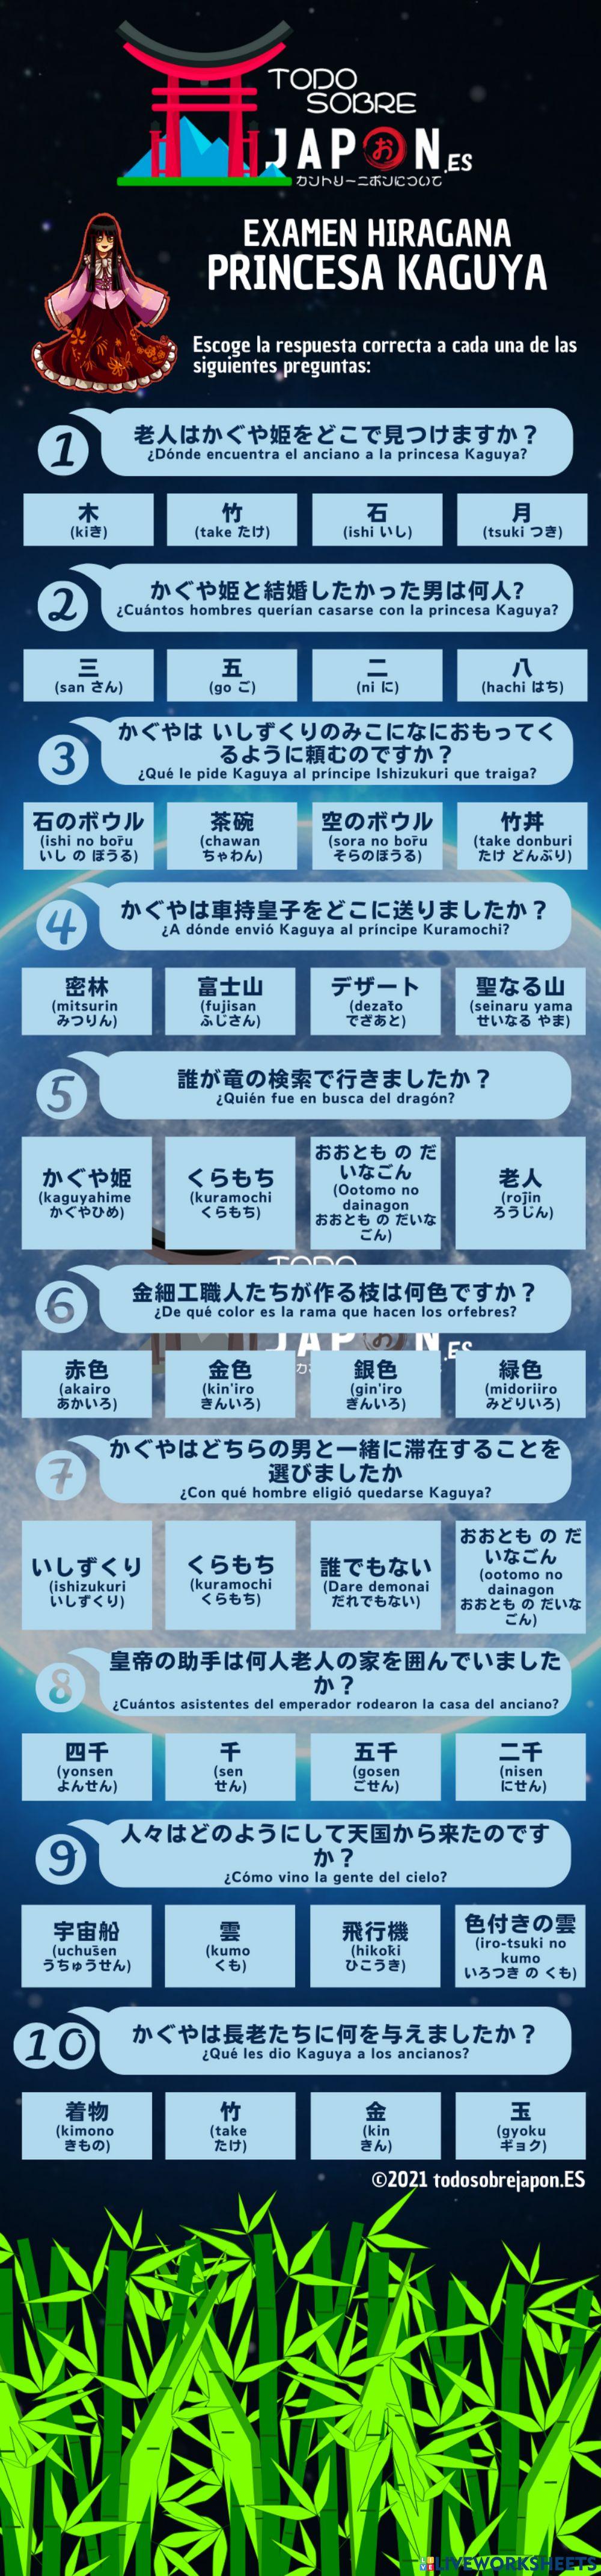 Examen lectura hiragana japonés